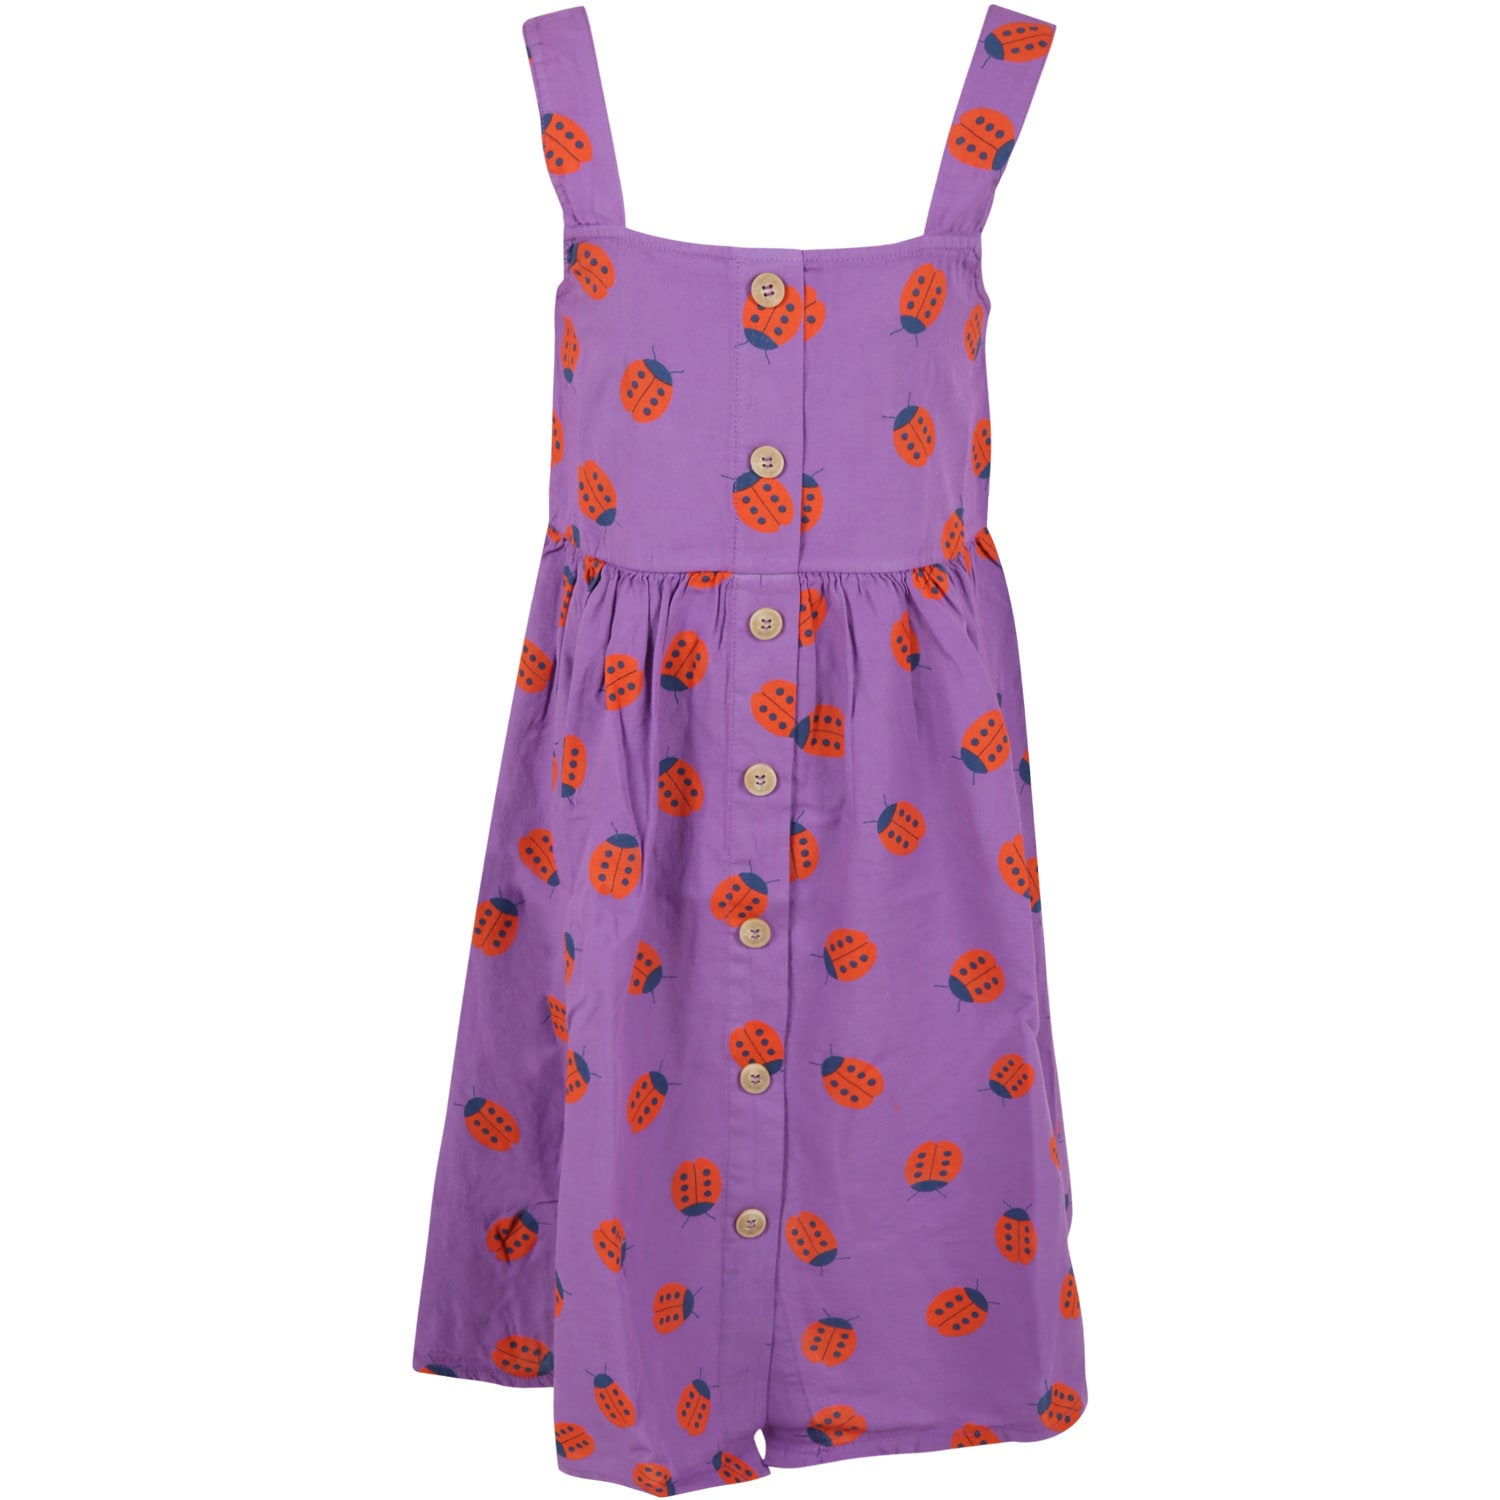 Bobo Choses Purple Dress For Girl With Ladybugs